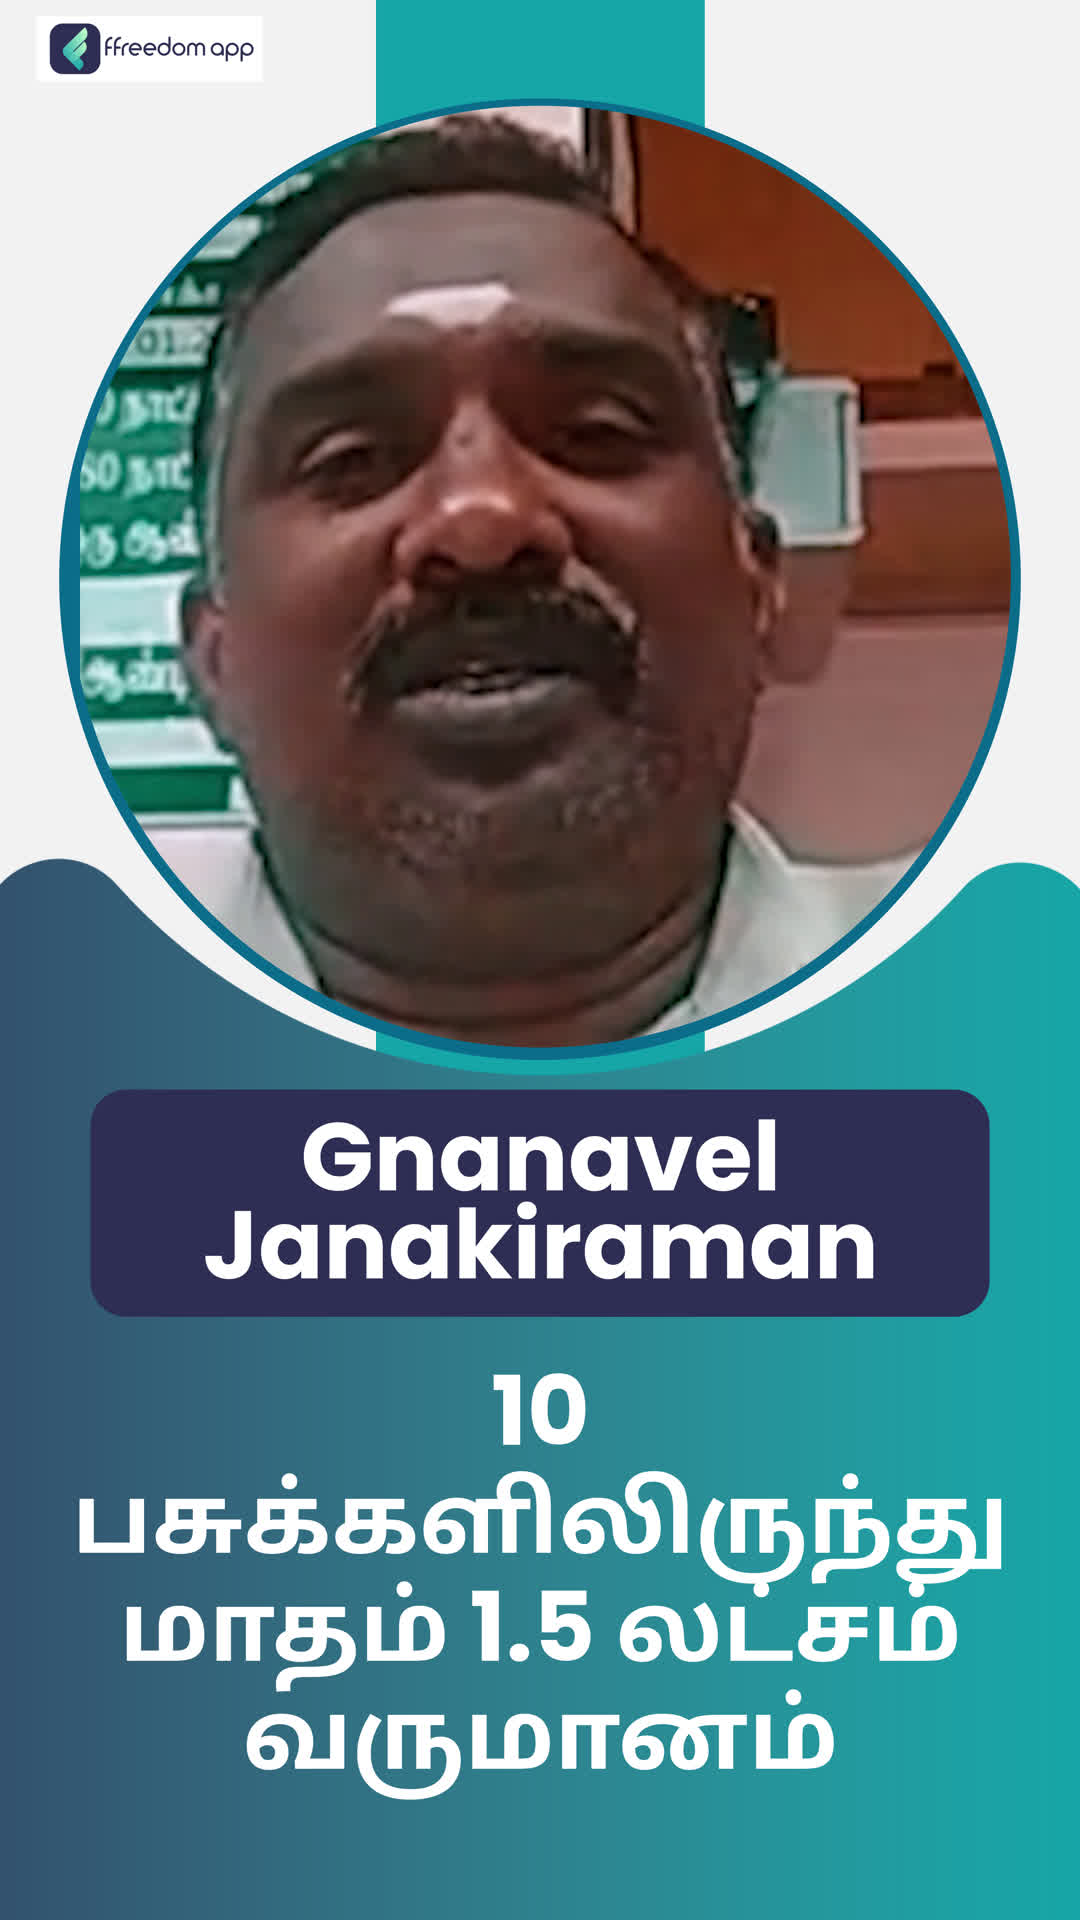 Gnanavel Janakiraman's Honest Review of ffreedom app - Puducherry ,Tamil Nadu